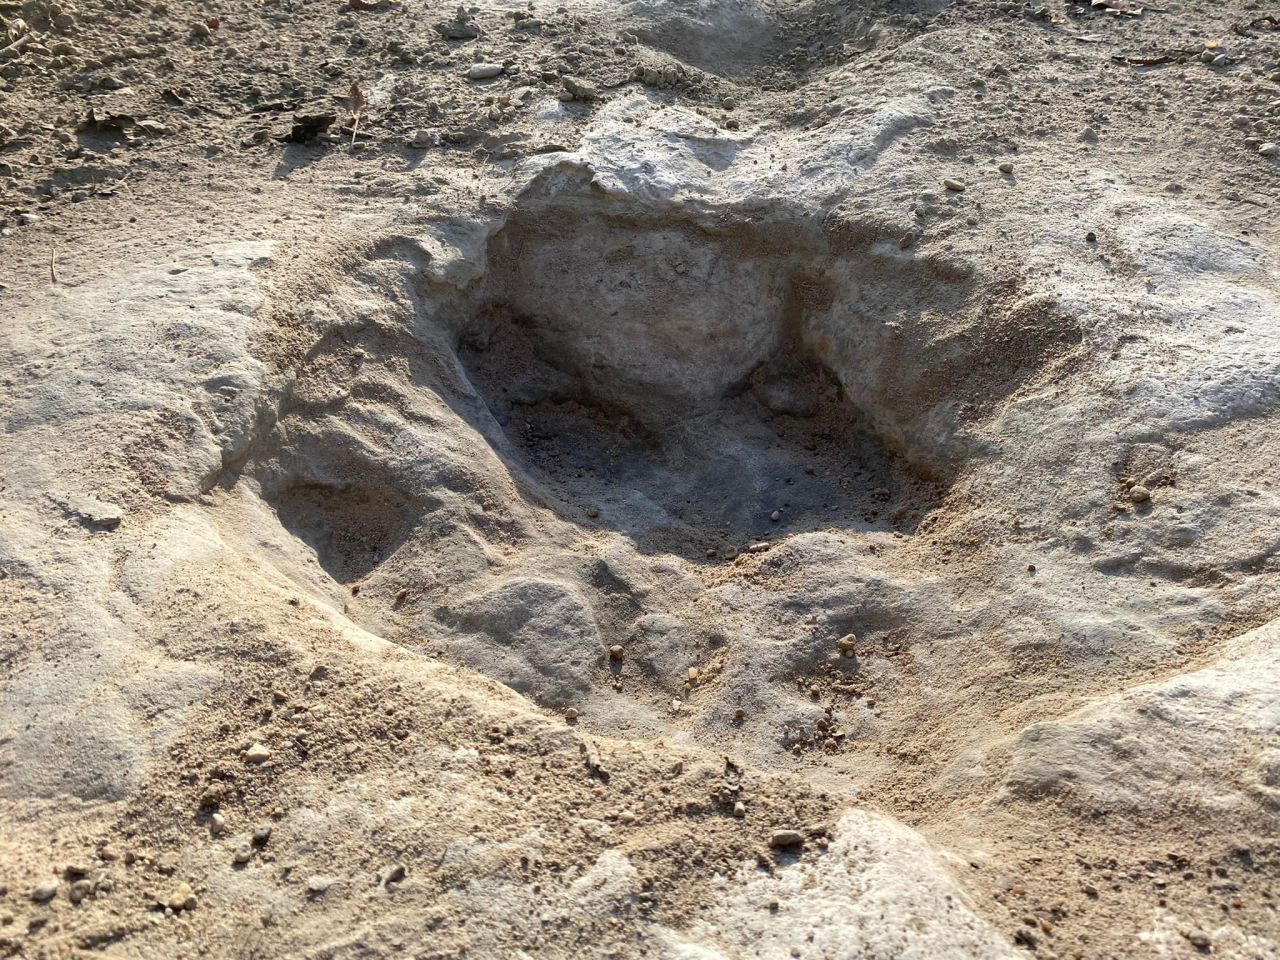 A close-up of the dinosaur tracks